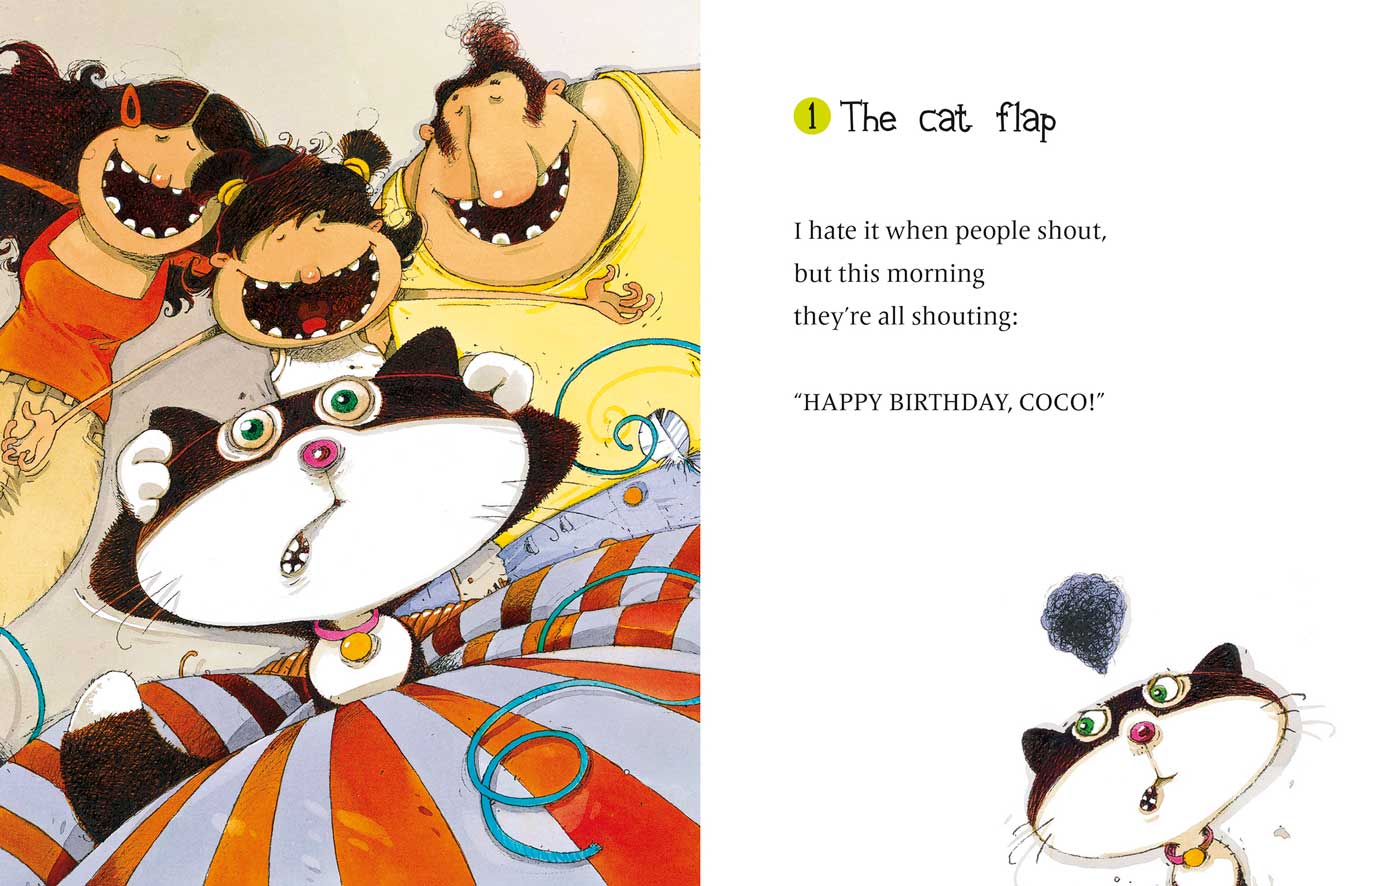 Coco the cat